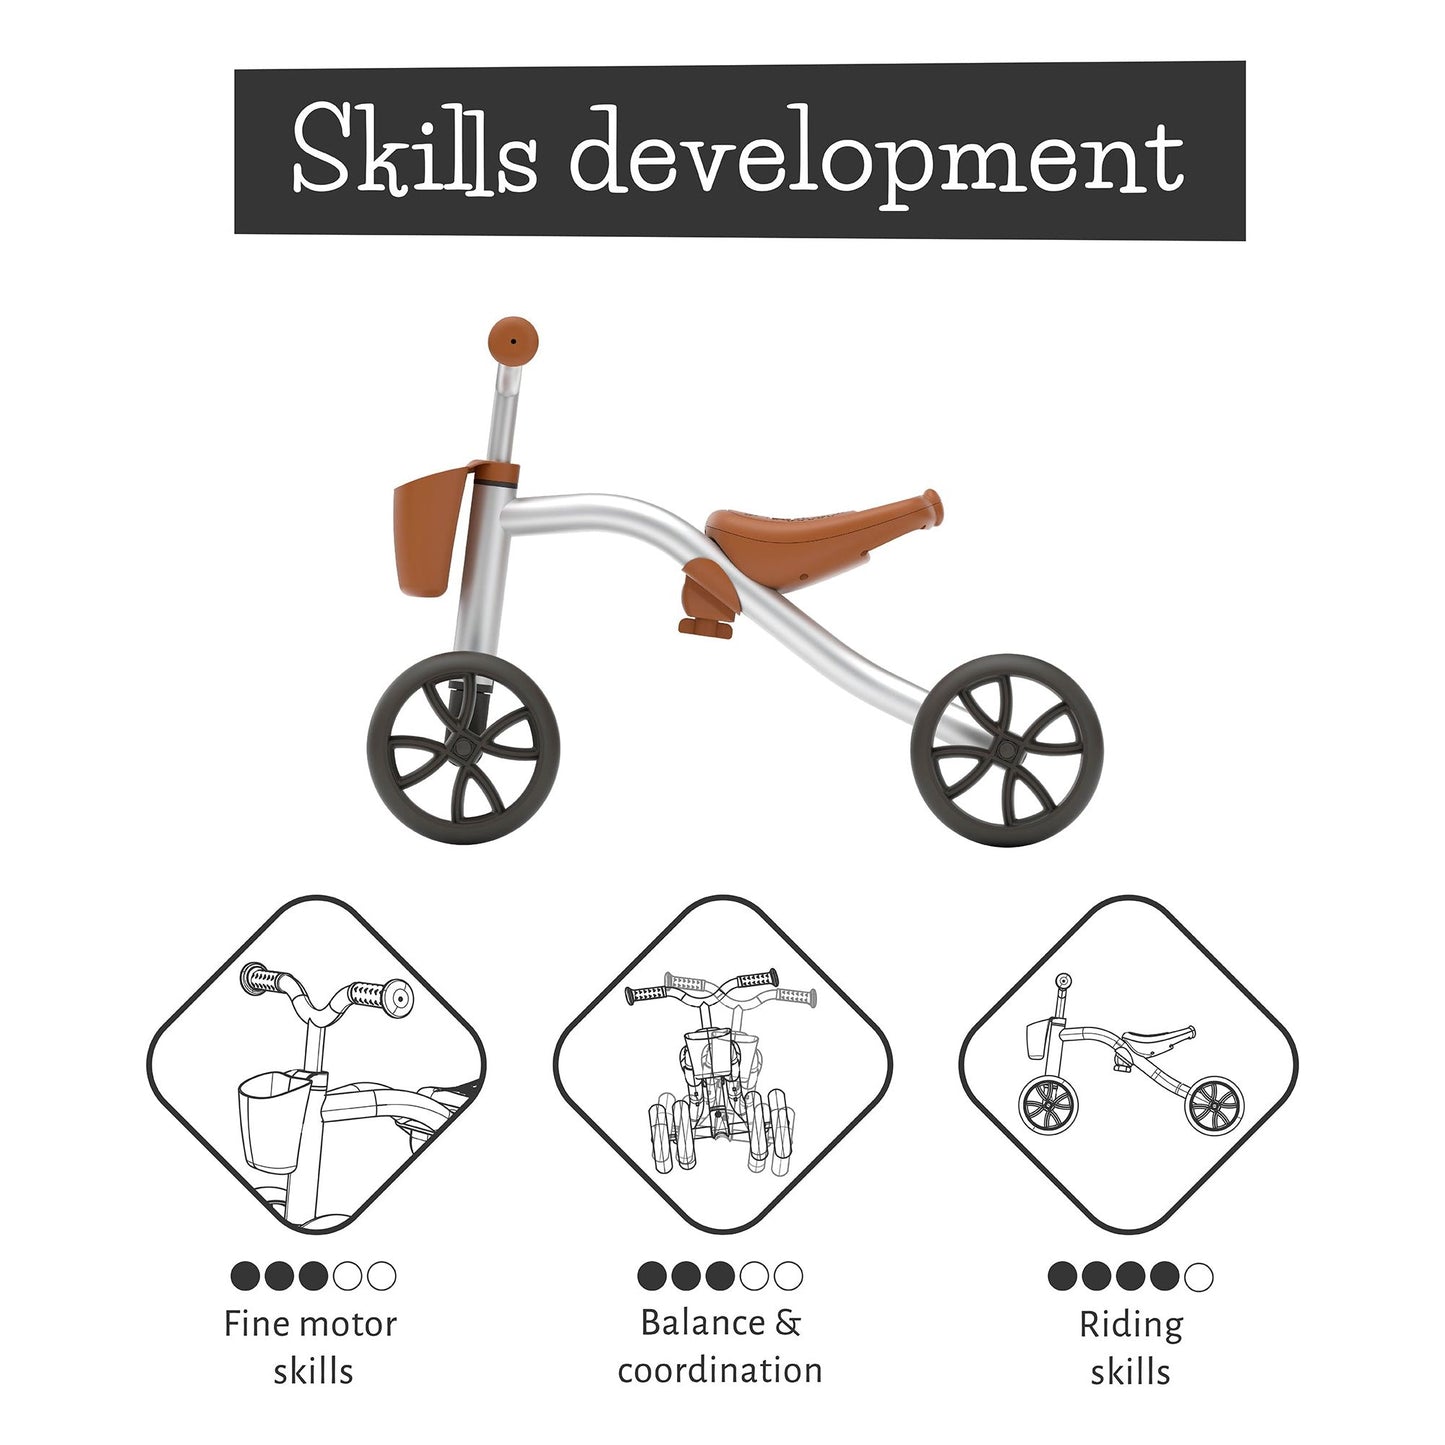 Chillafish Quadie 2 Ride-On and Basket Silver skills development information